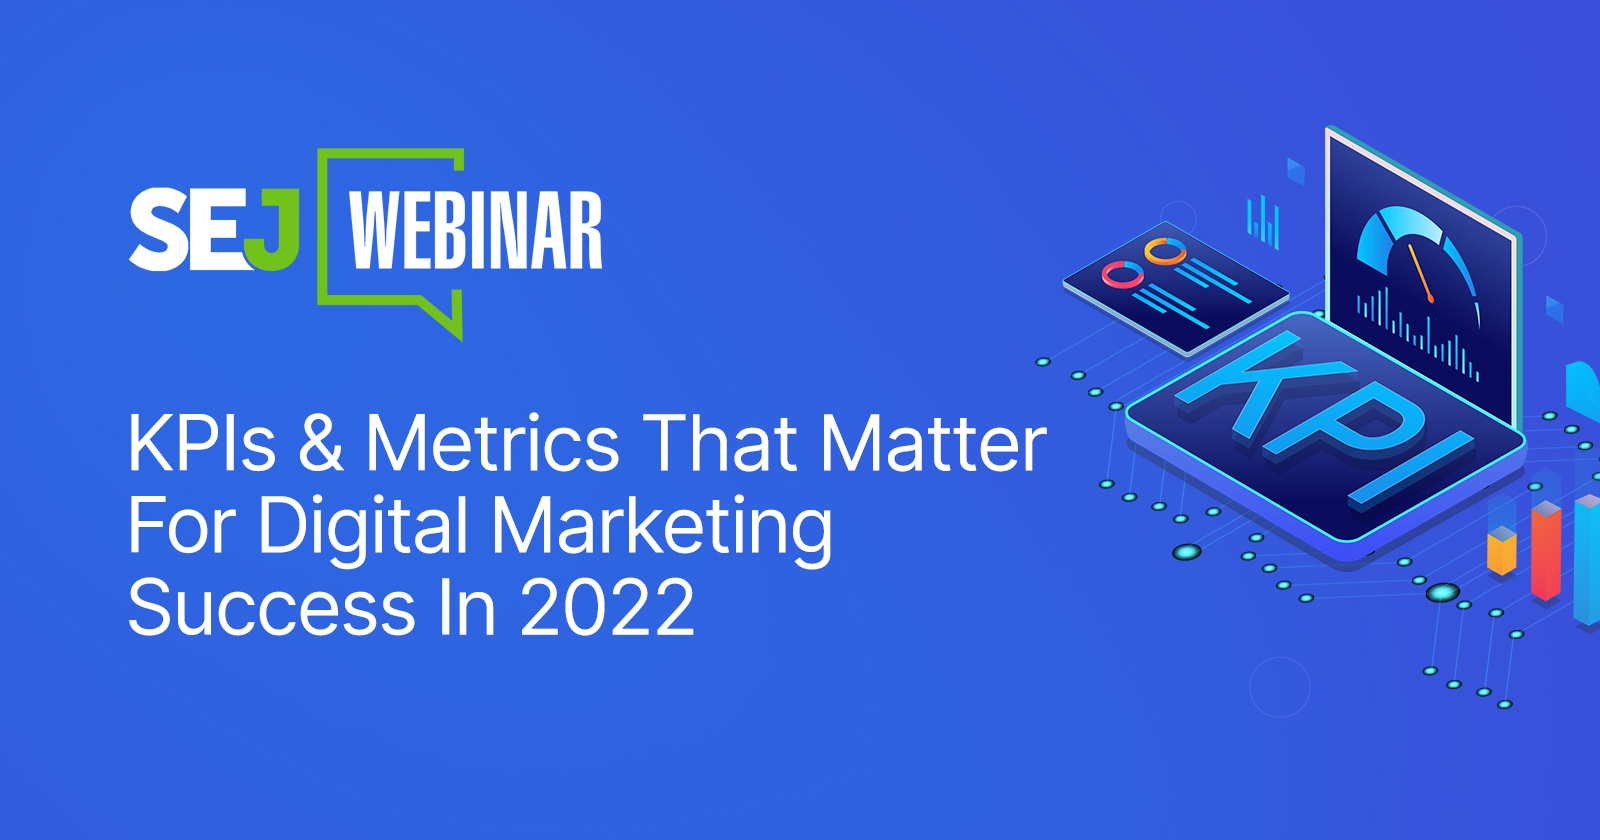 KPIs & Metrics That Matter For Digital Marketing Success In 2022 via @sejournal, @hethr_campbell